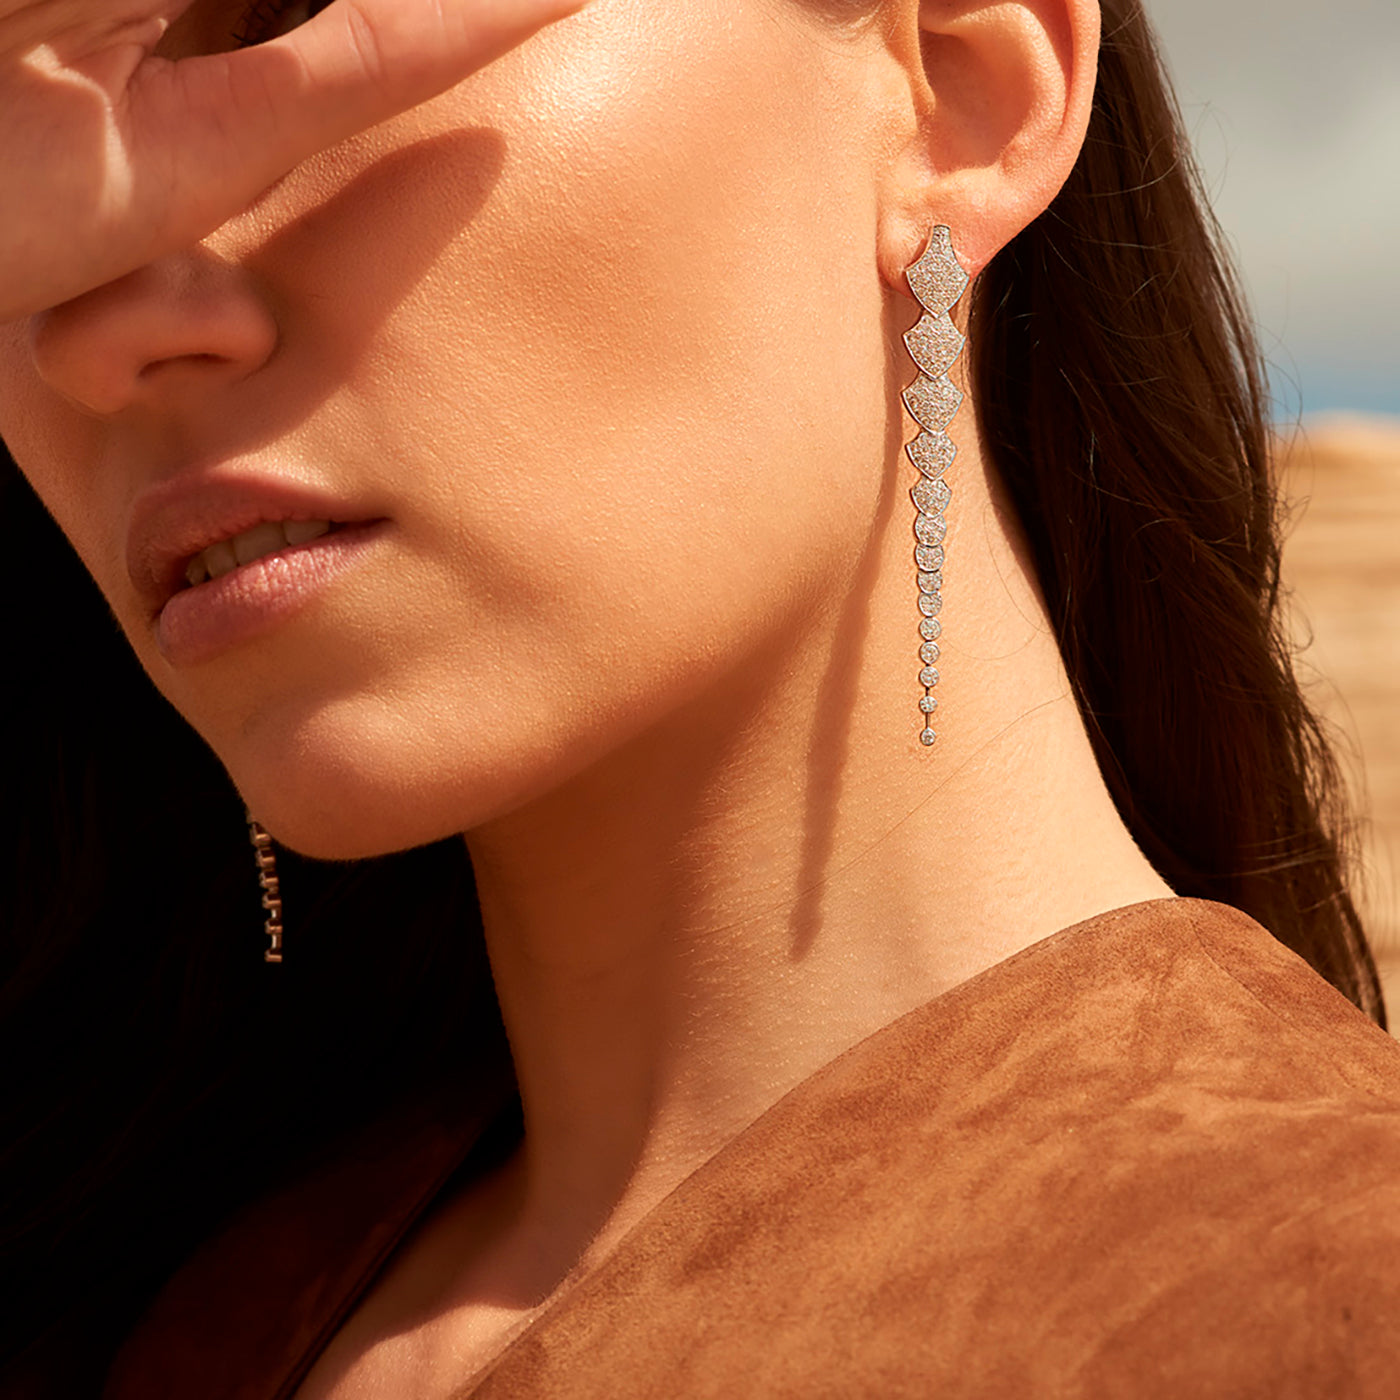 Python diamond earrings